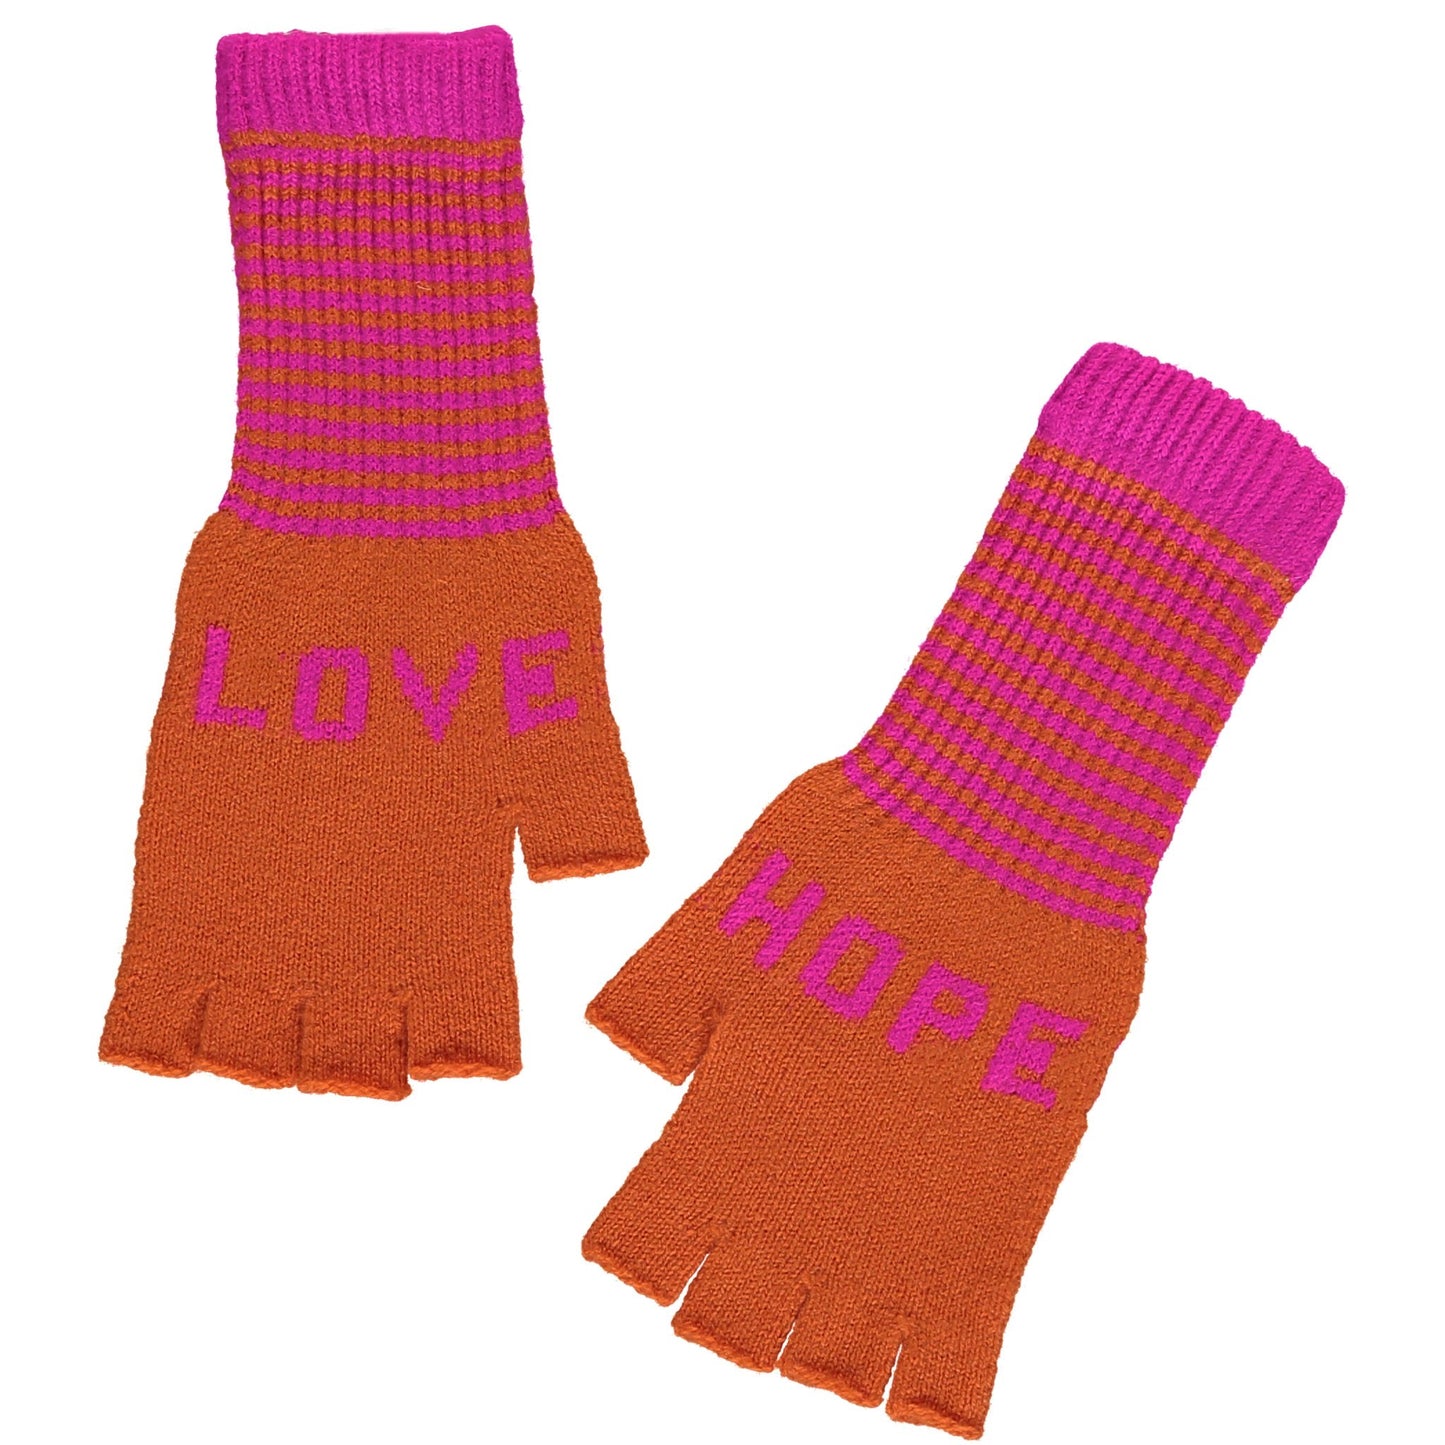 Fingerless Love Hope Gloves in Orange and Fuchsia Pink